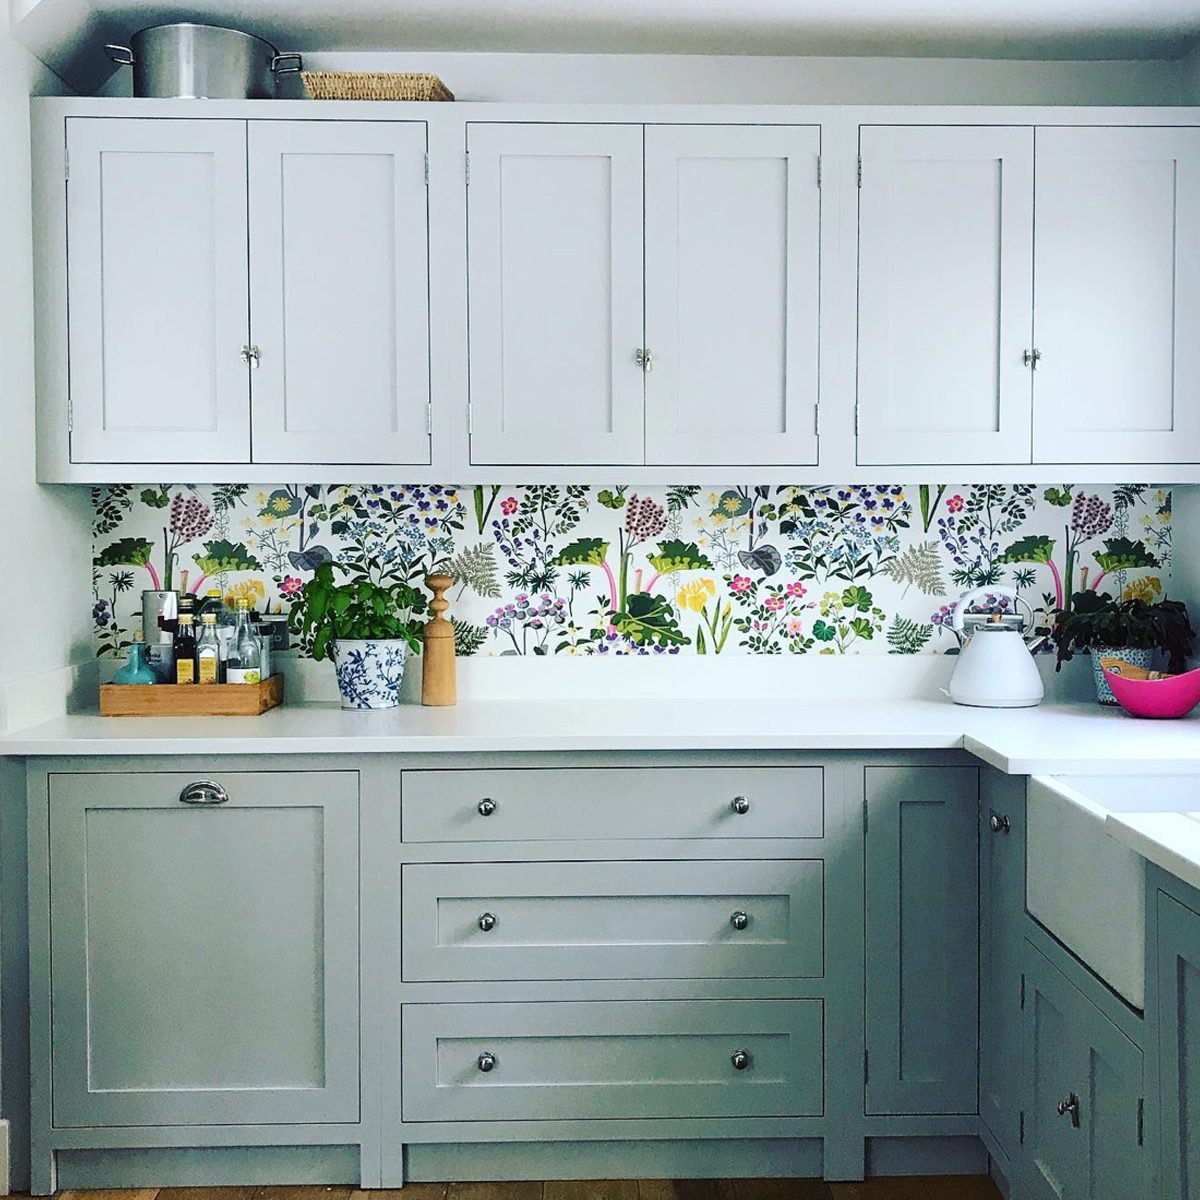 Kitchen Wallpaper Idea Backsplash Courtesy @nordiclivingincolour Via Instagram